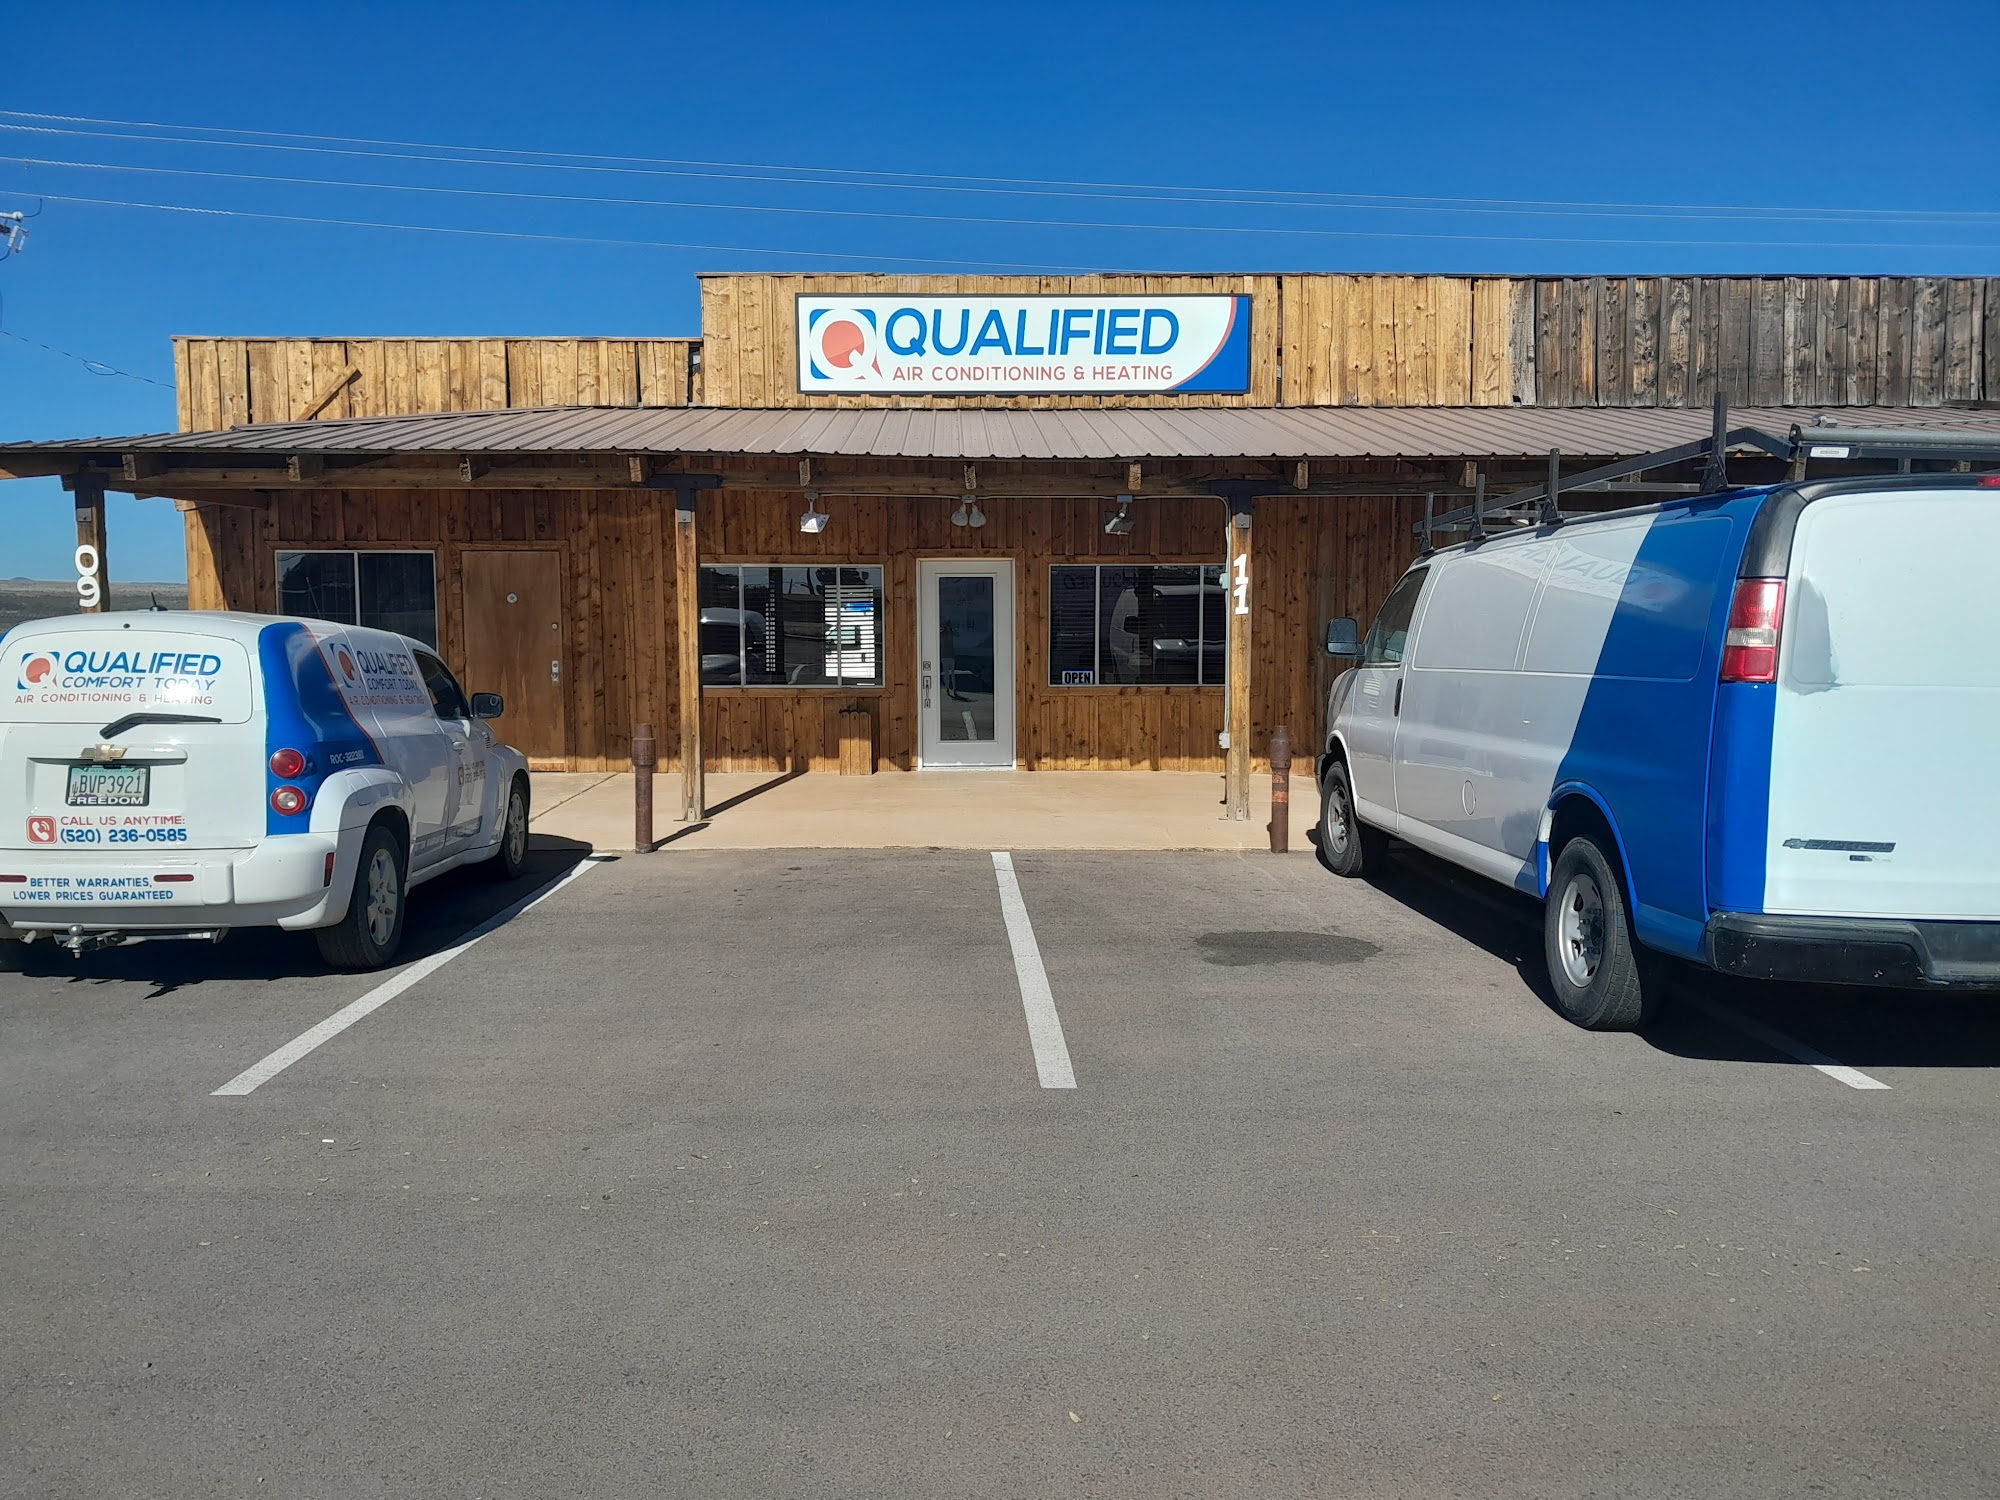 Qualified Comfort Air Conditioning and Heating 111 North Huachuca Boulevard, Huachuca City Arizona 85616